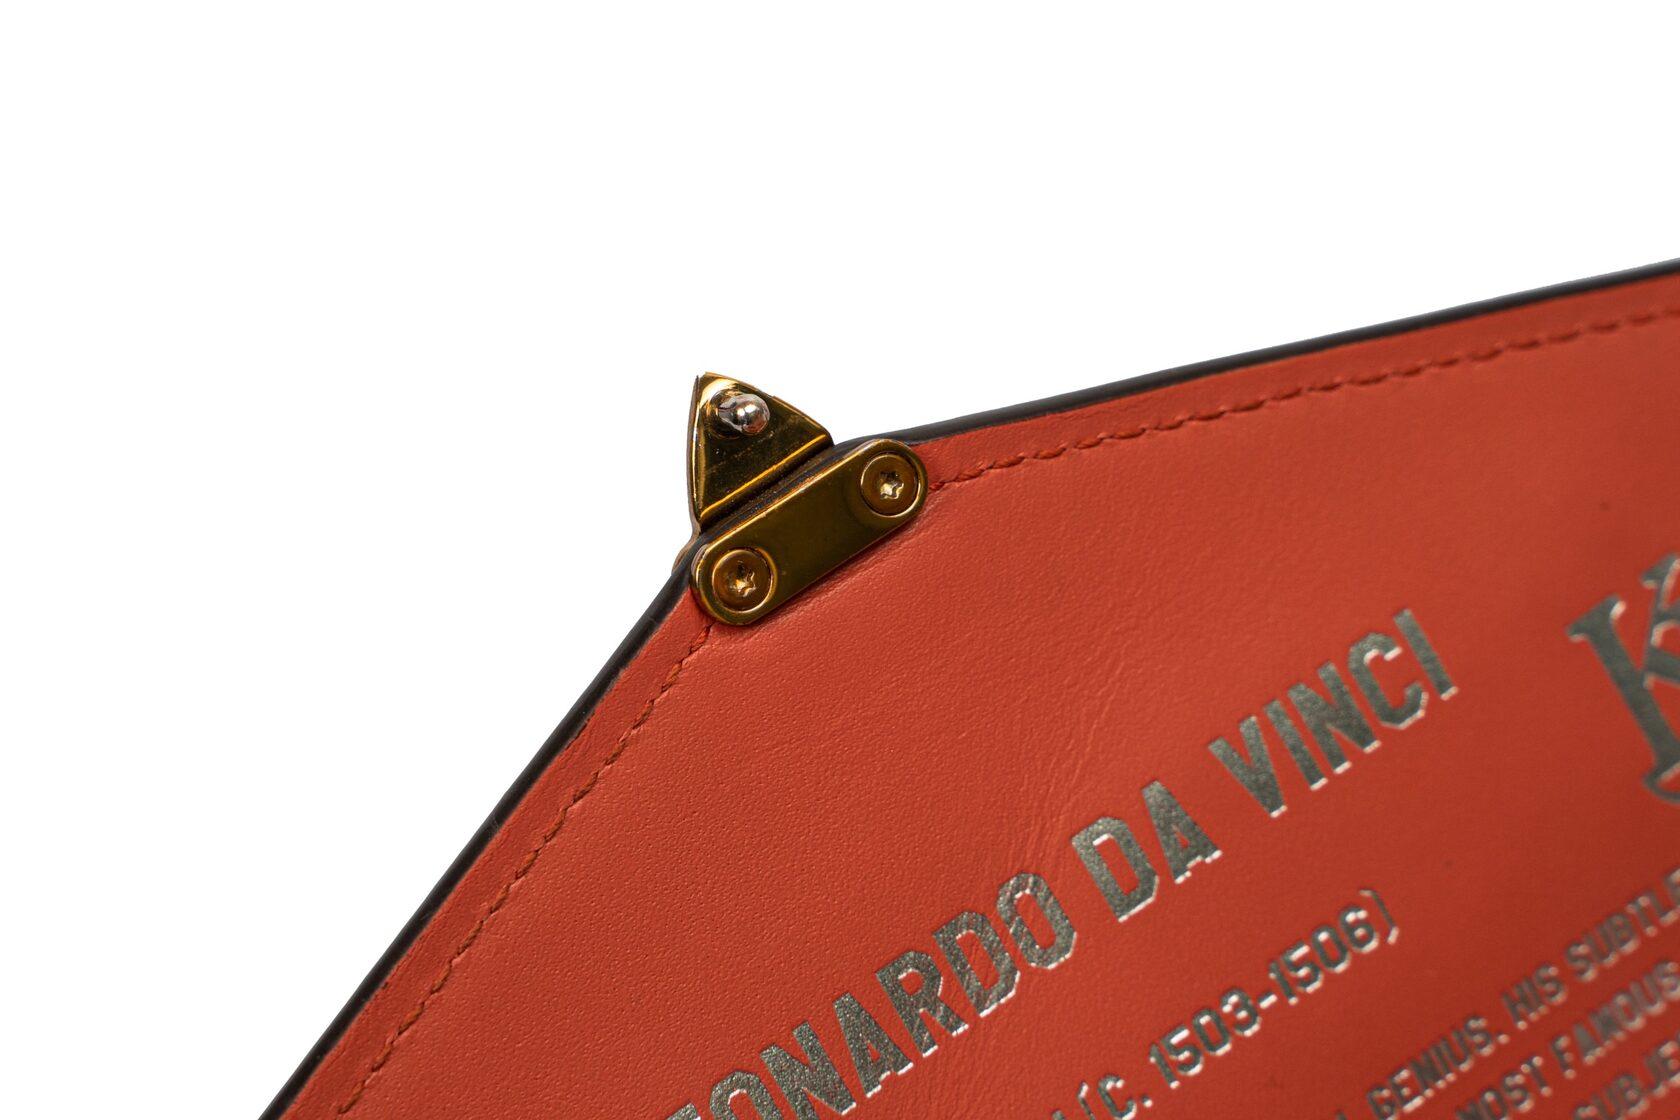 Louis Vuitton Chain Bag Limited Edition with designer Jeff Coons - Da Vinci For Sale 6